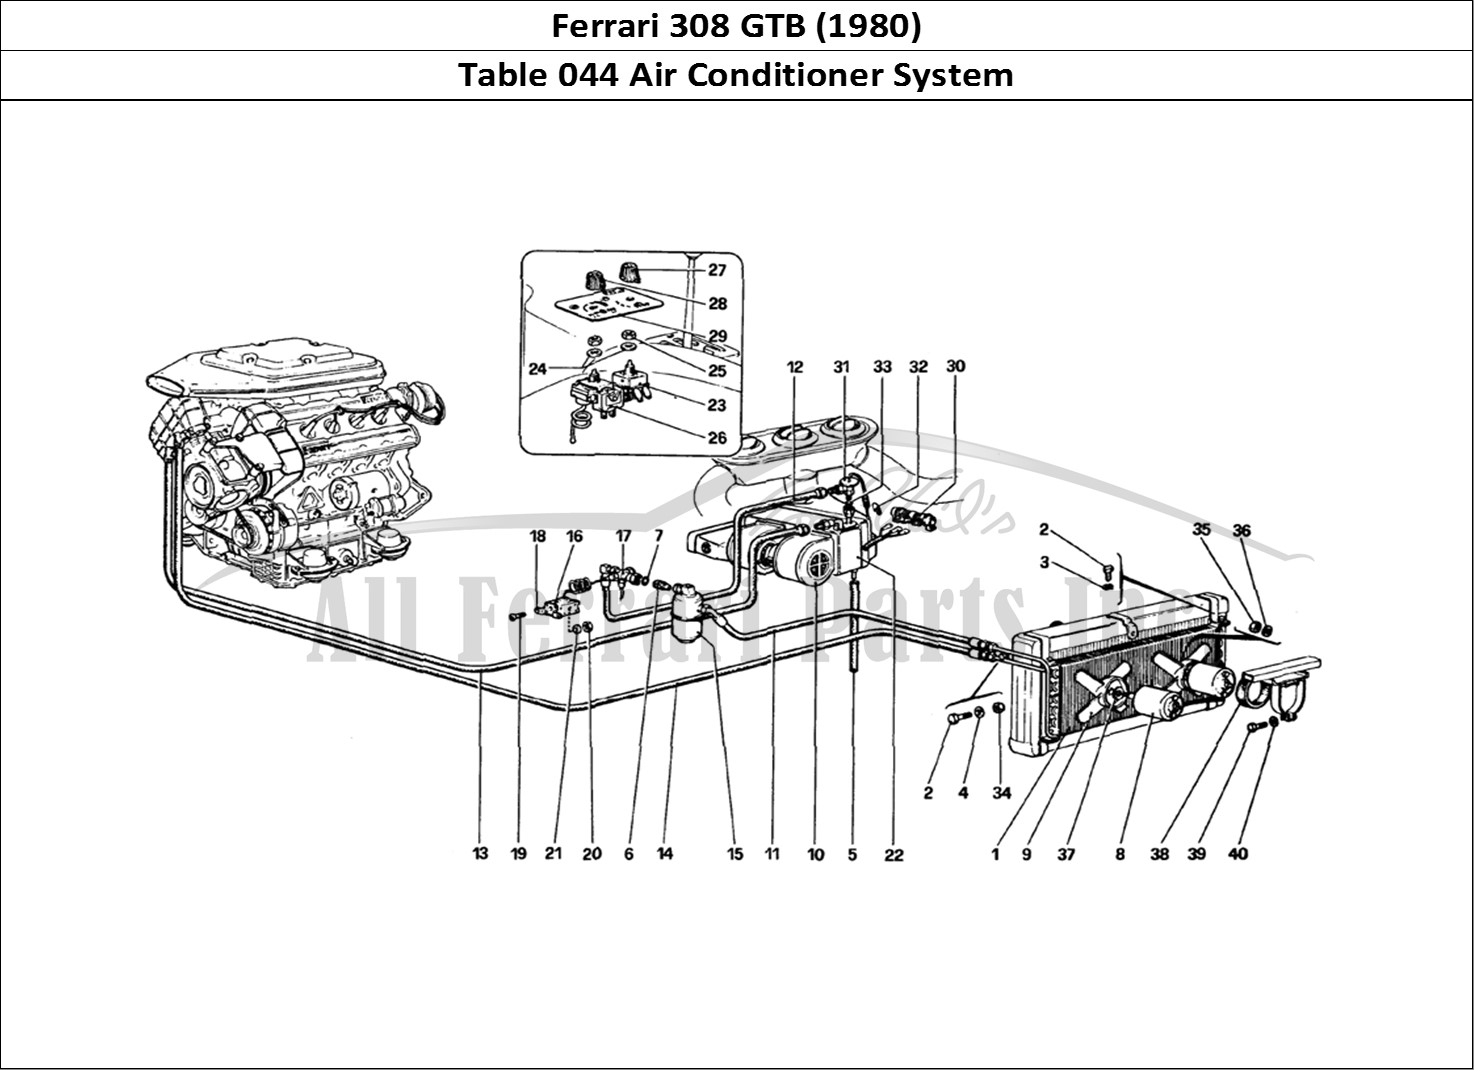 Ferrari Parts Ferrari 308 GTB (1980) Page 044 Air Conditioning System